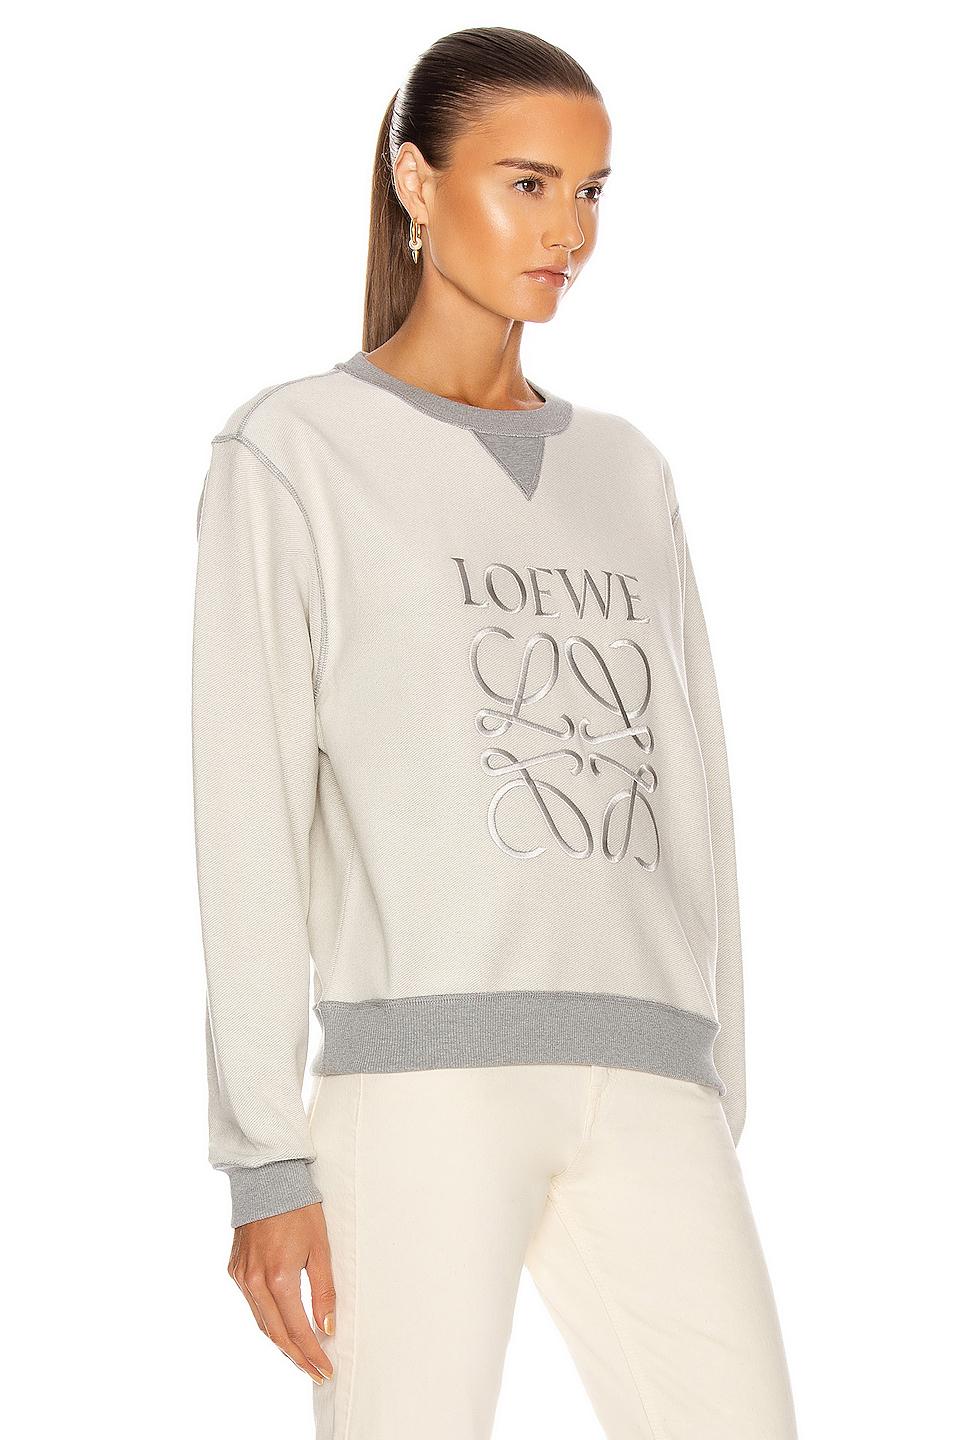 Loewe Cotton Anagram Sweatshirt in Grey Melange (Gray) - Lyst